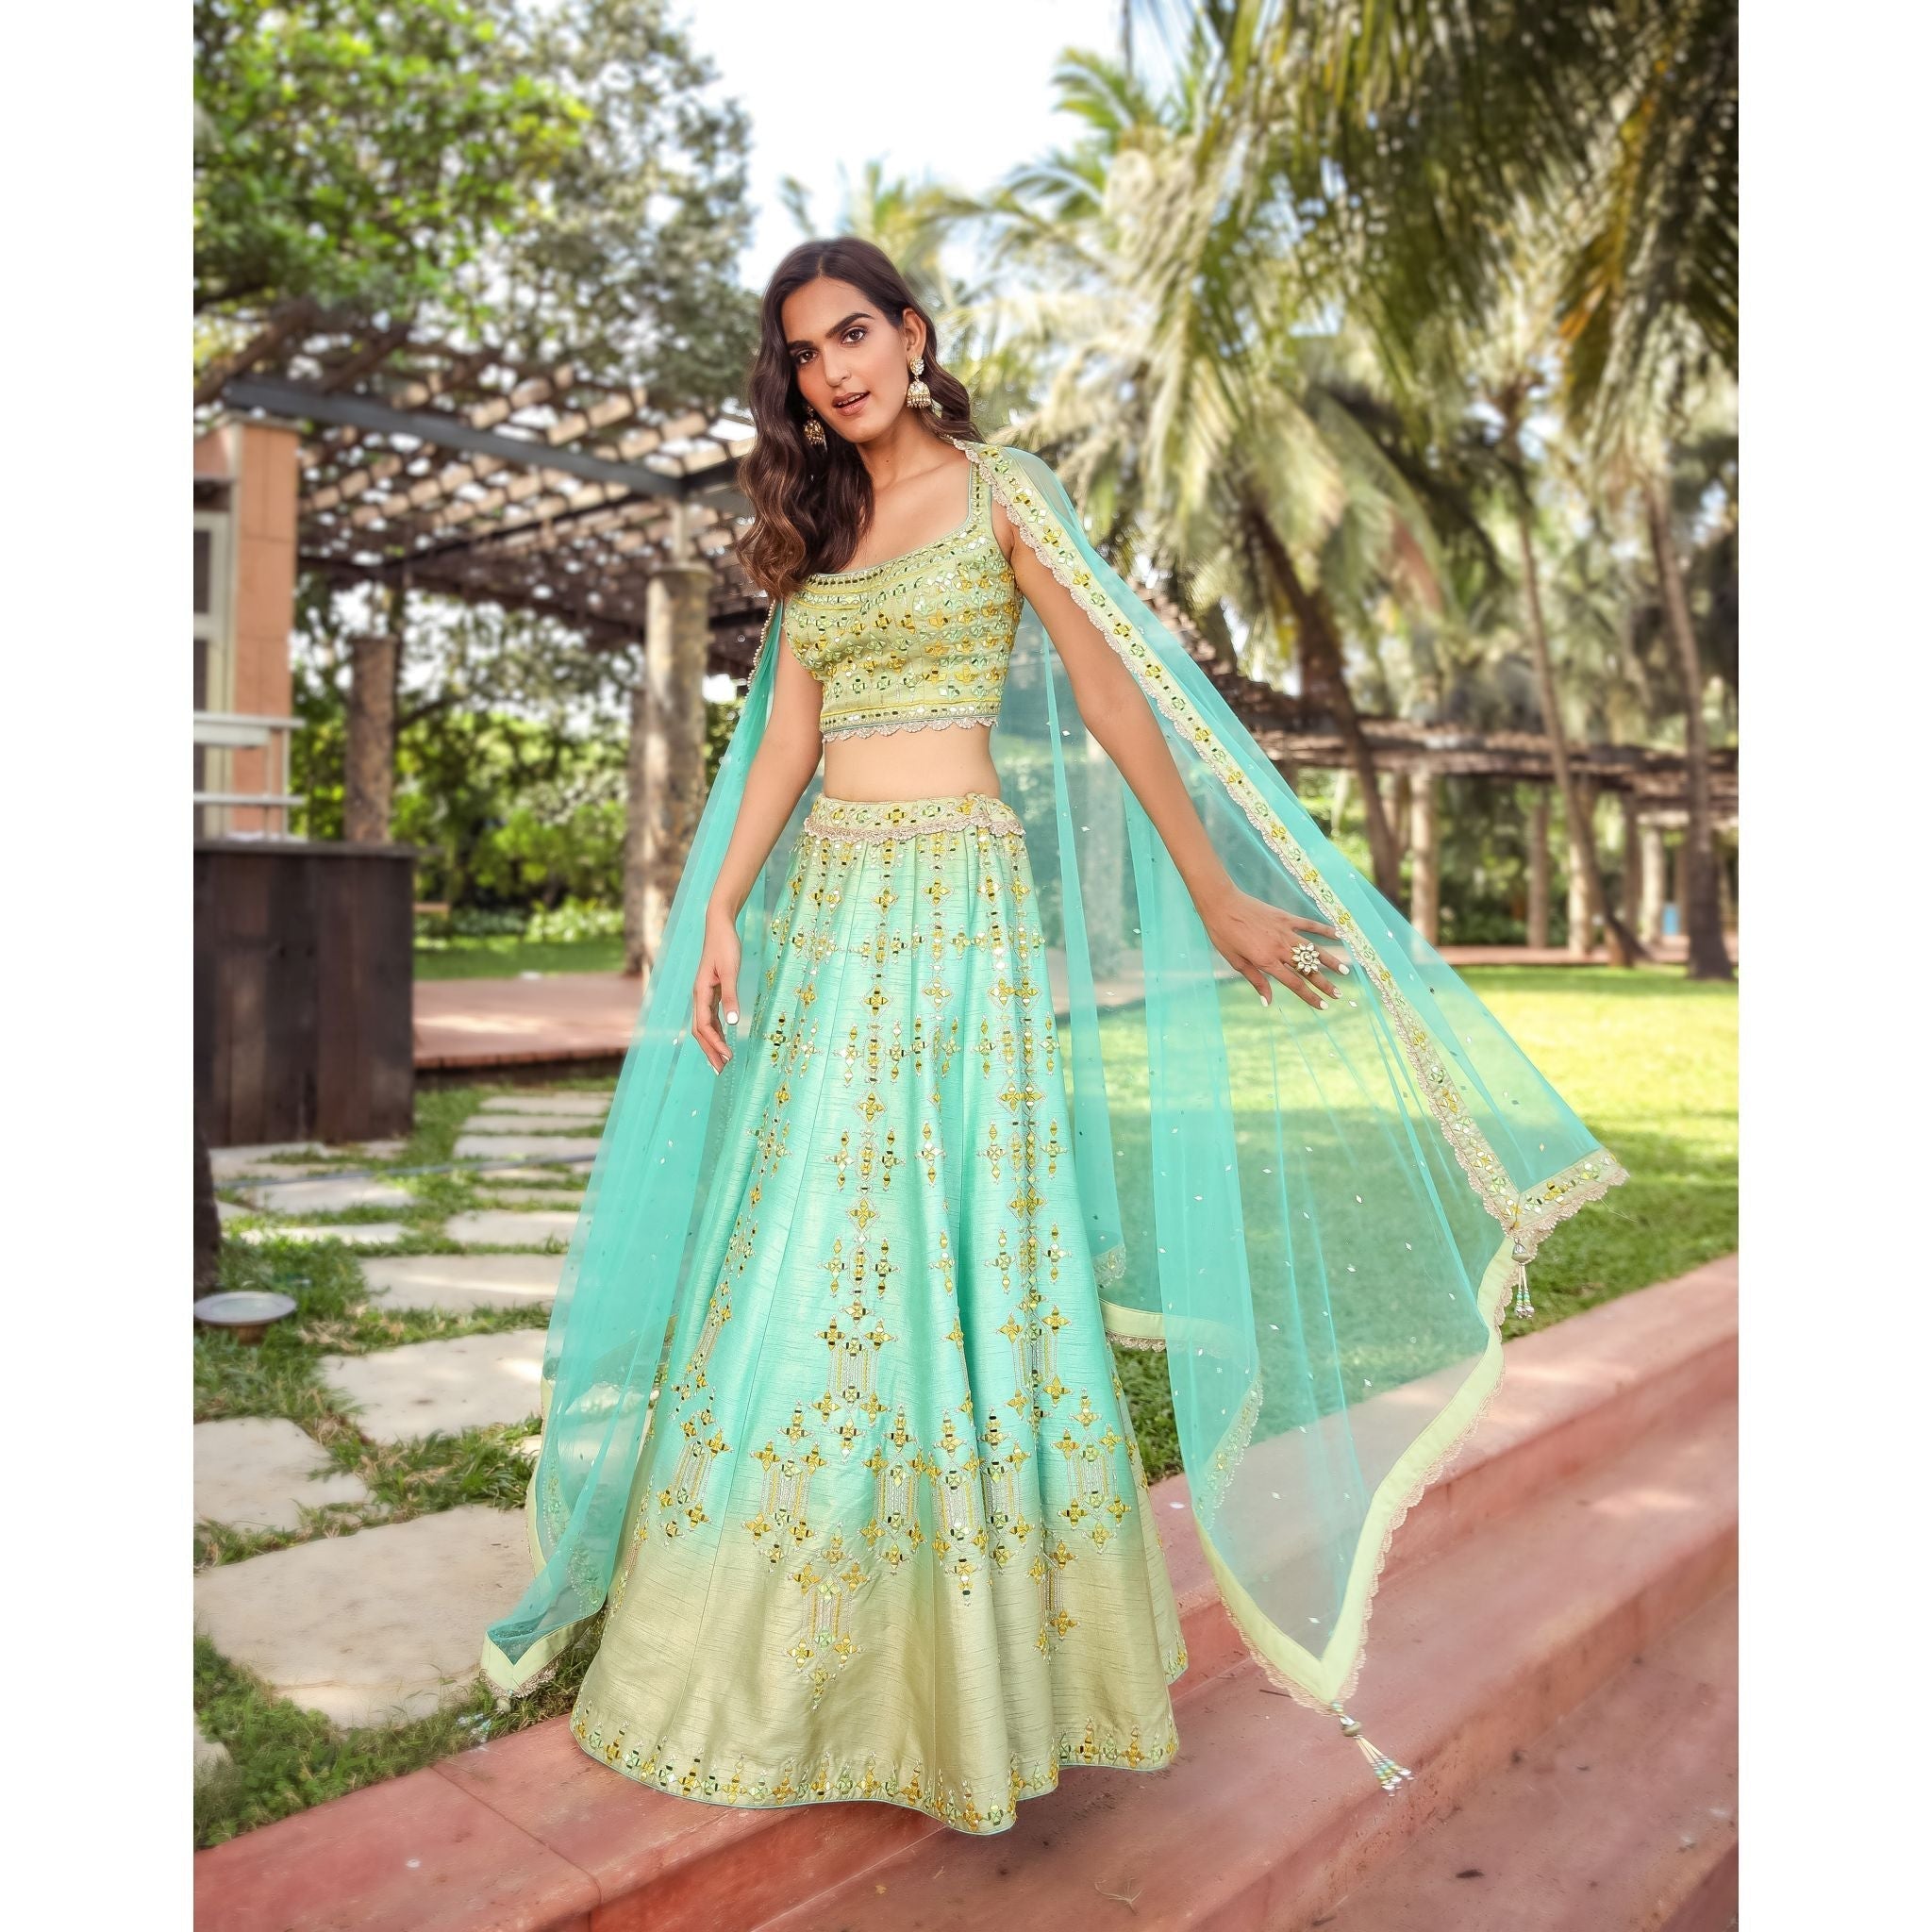 Mint Turquoise Mirrorwork Lehenga Set - Indian Designer Bridal Wedding Outfit